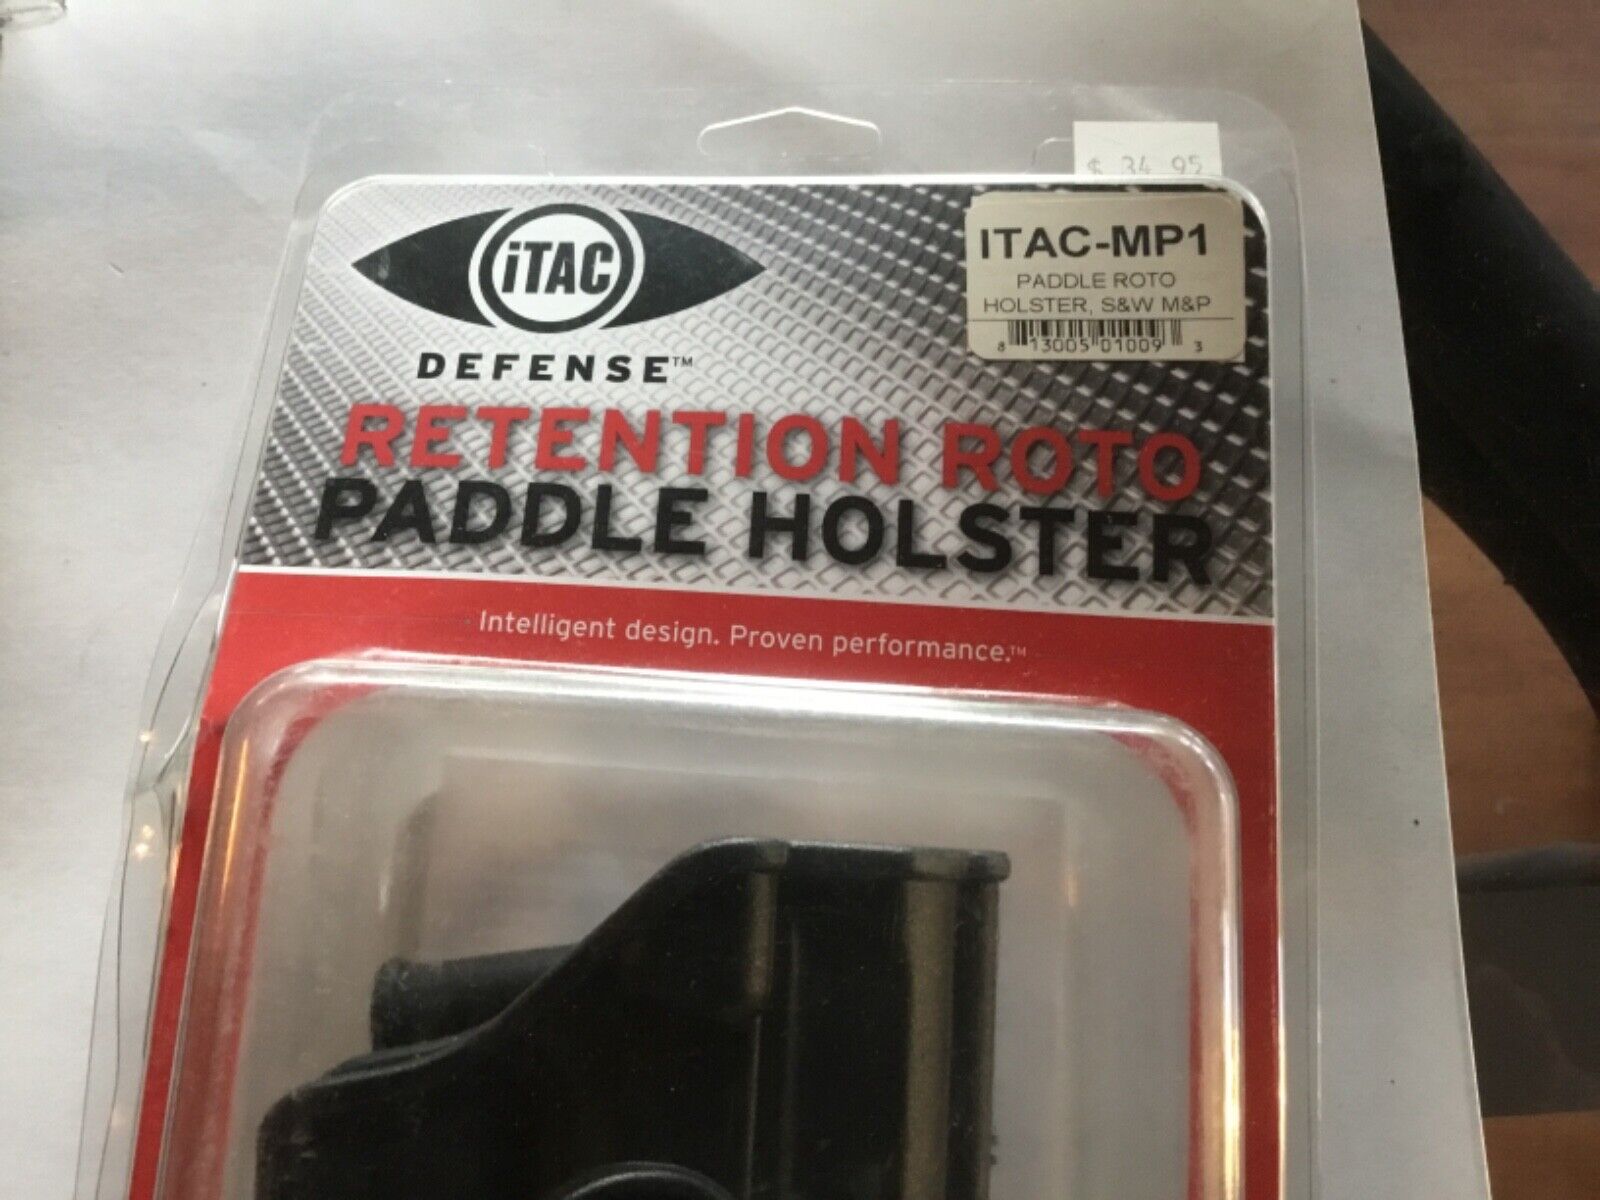 ITac paddle holster S&W M&P 9/40 caliber